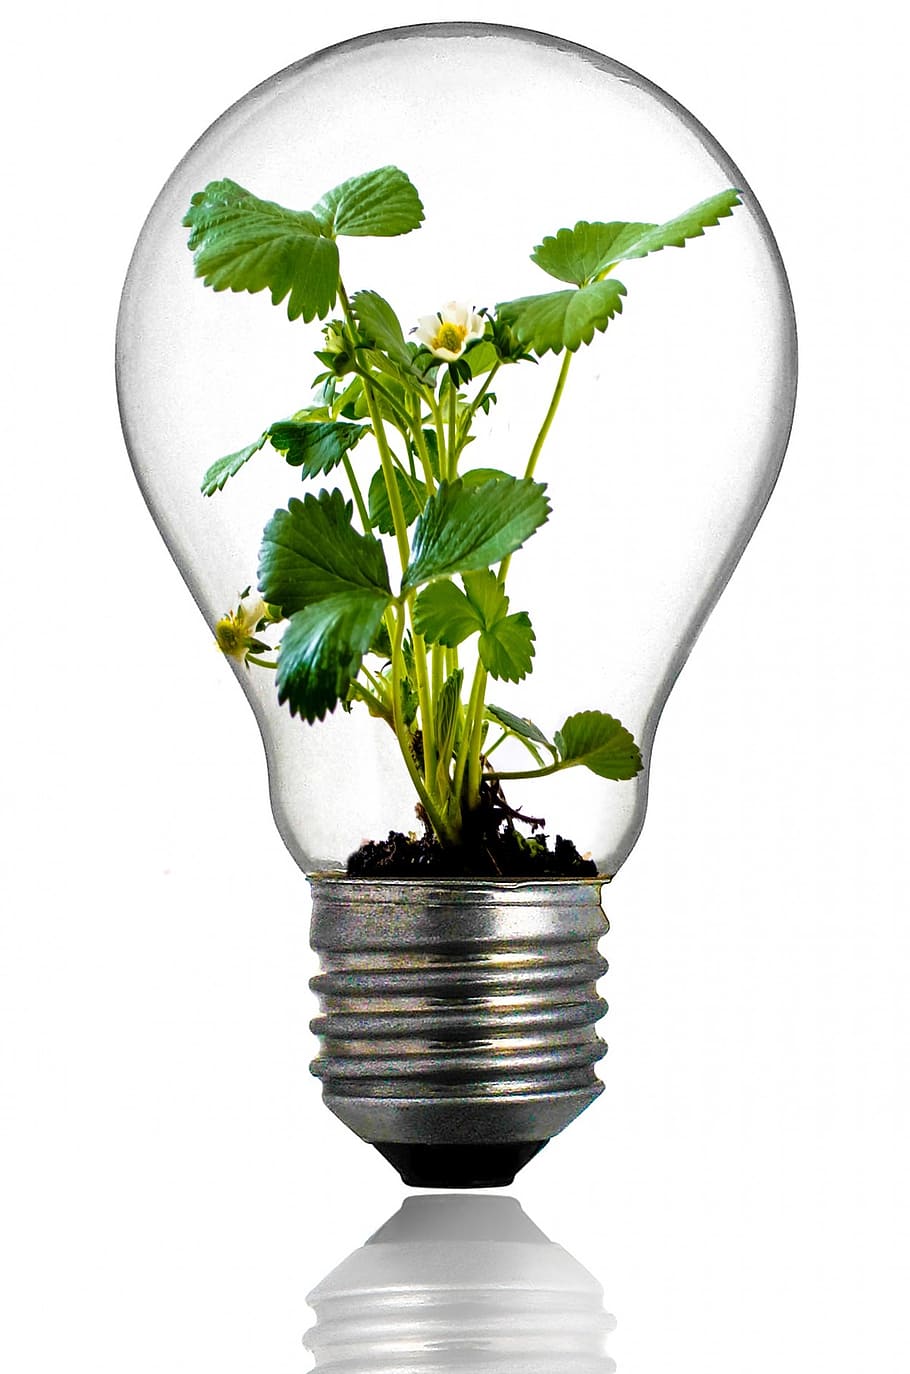 limpar, bulbo de vidro, verde, planta, bulbo, crescimento, luz, folha, economia, isolado